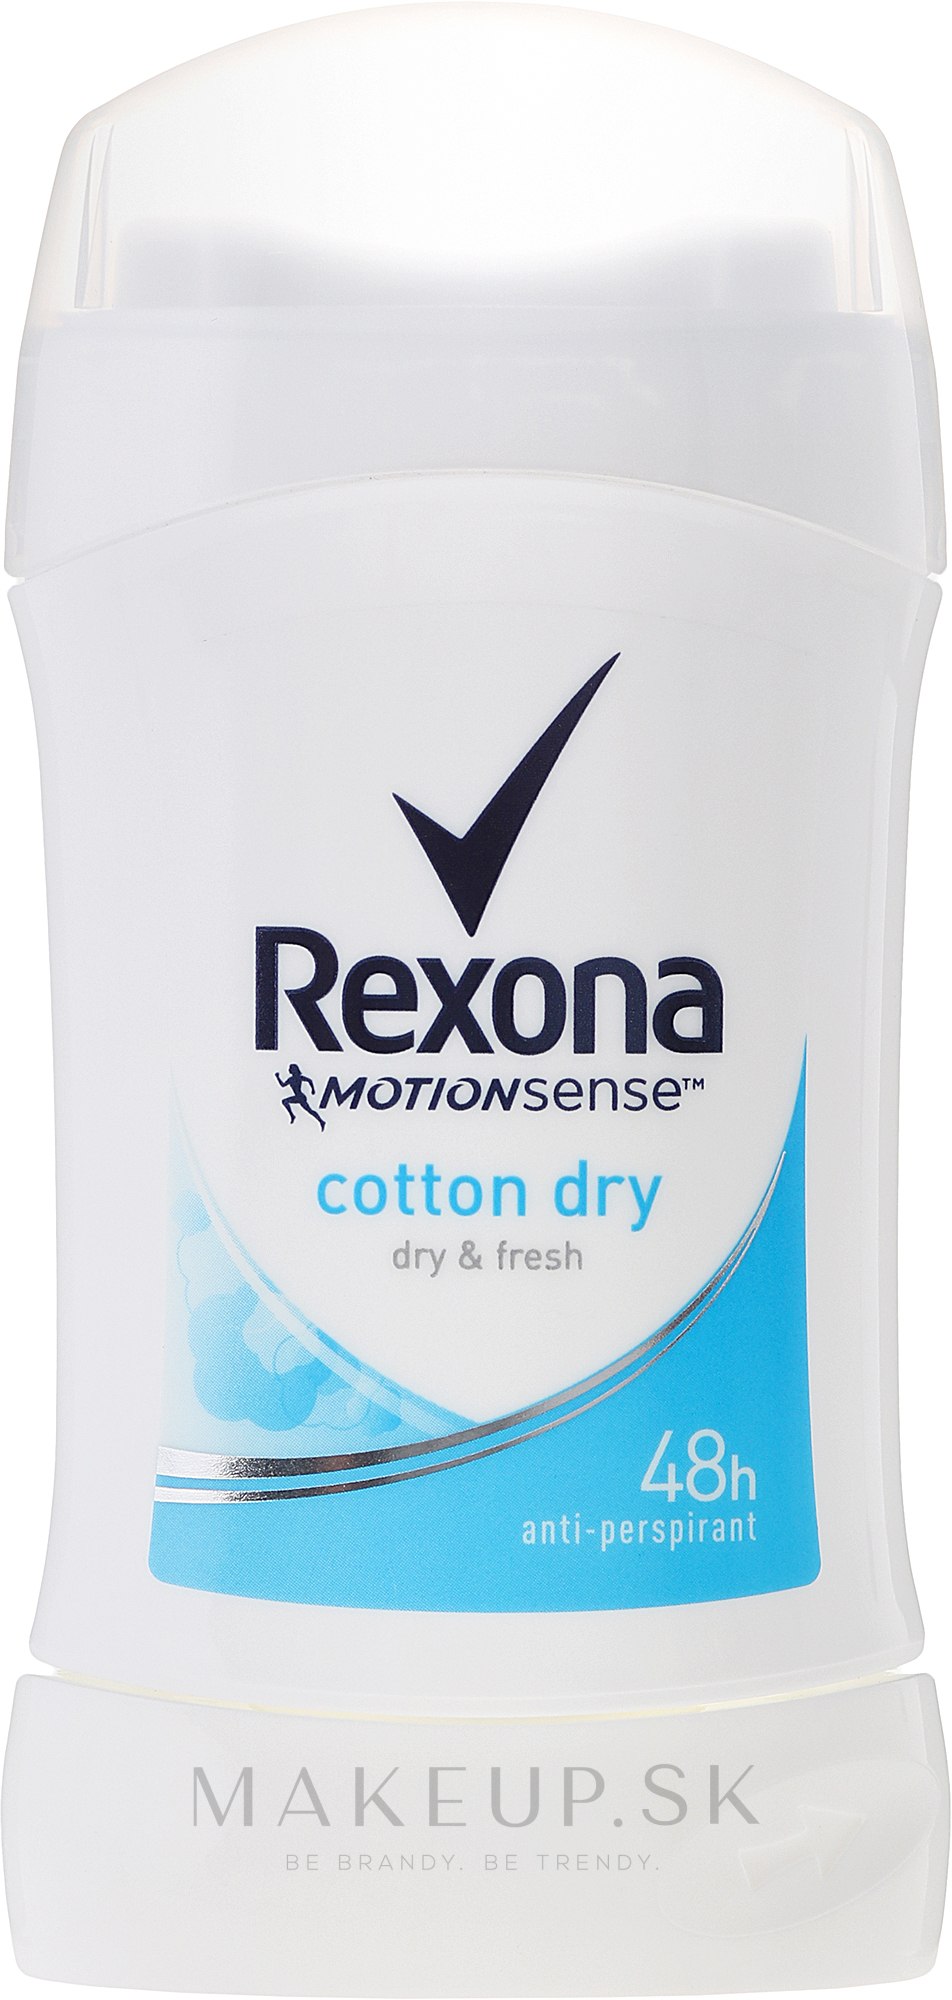 Rexona Cotton Dry Deodorant Stick - 40 ml